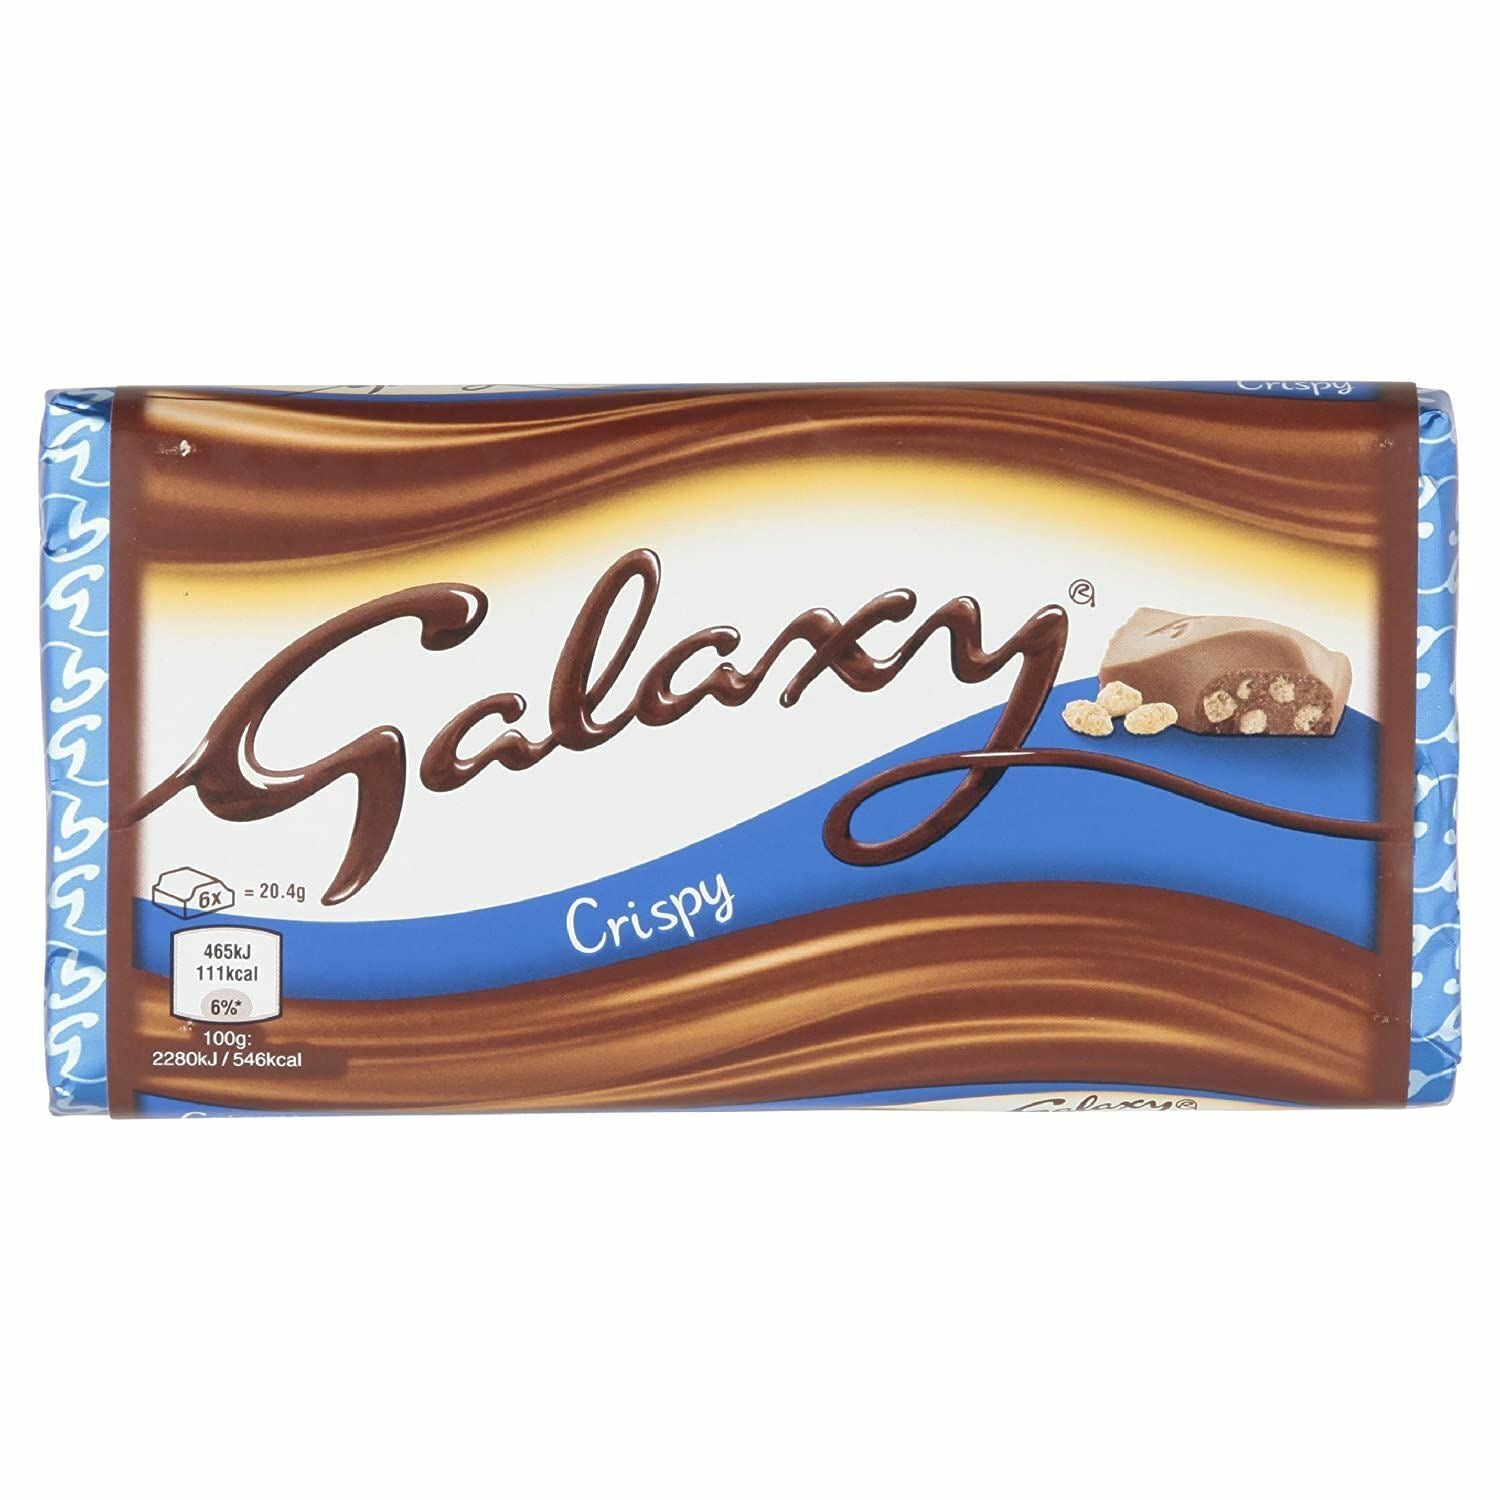 Galaxy Crispy Block 102g (UK)